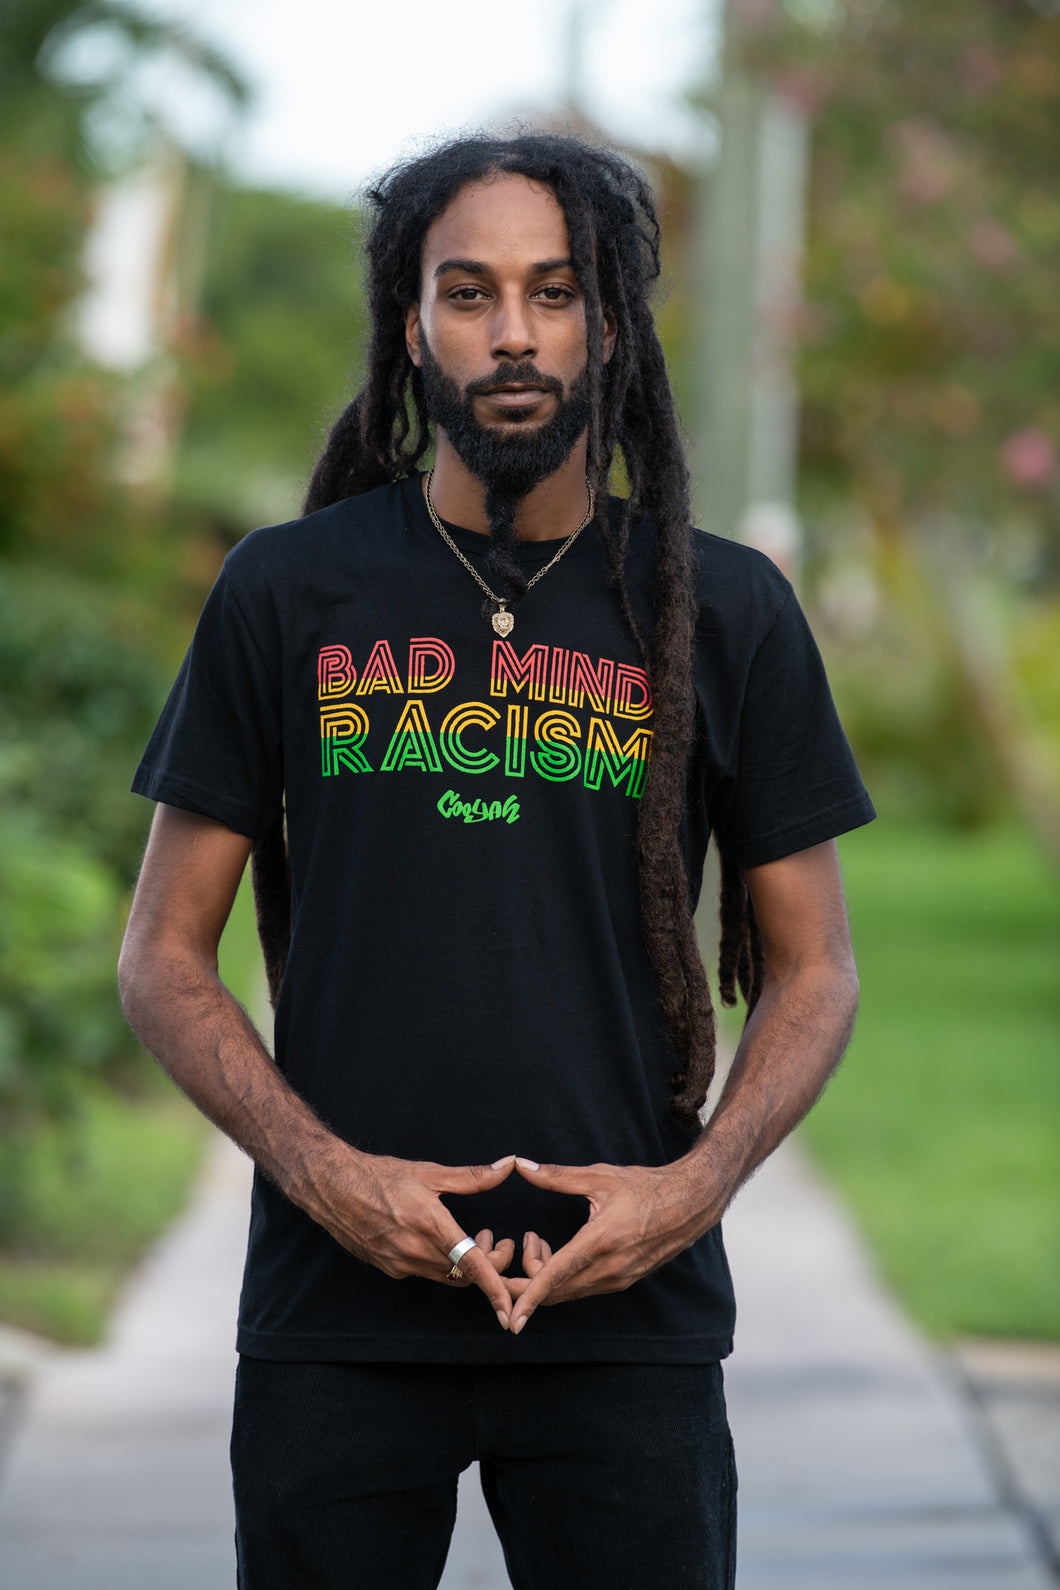 Cooyah Jamaica. Men's reggae graphic tees with Bad Mind Racism graphics screen printed in rasta colors. Jamaican owned clothing brand since 1987. Rastafari